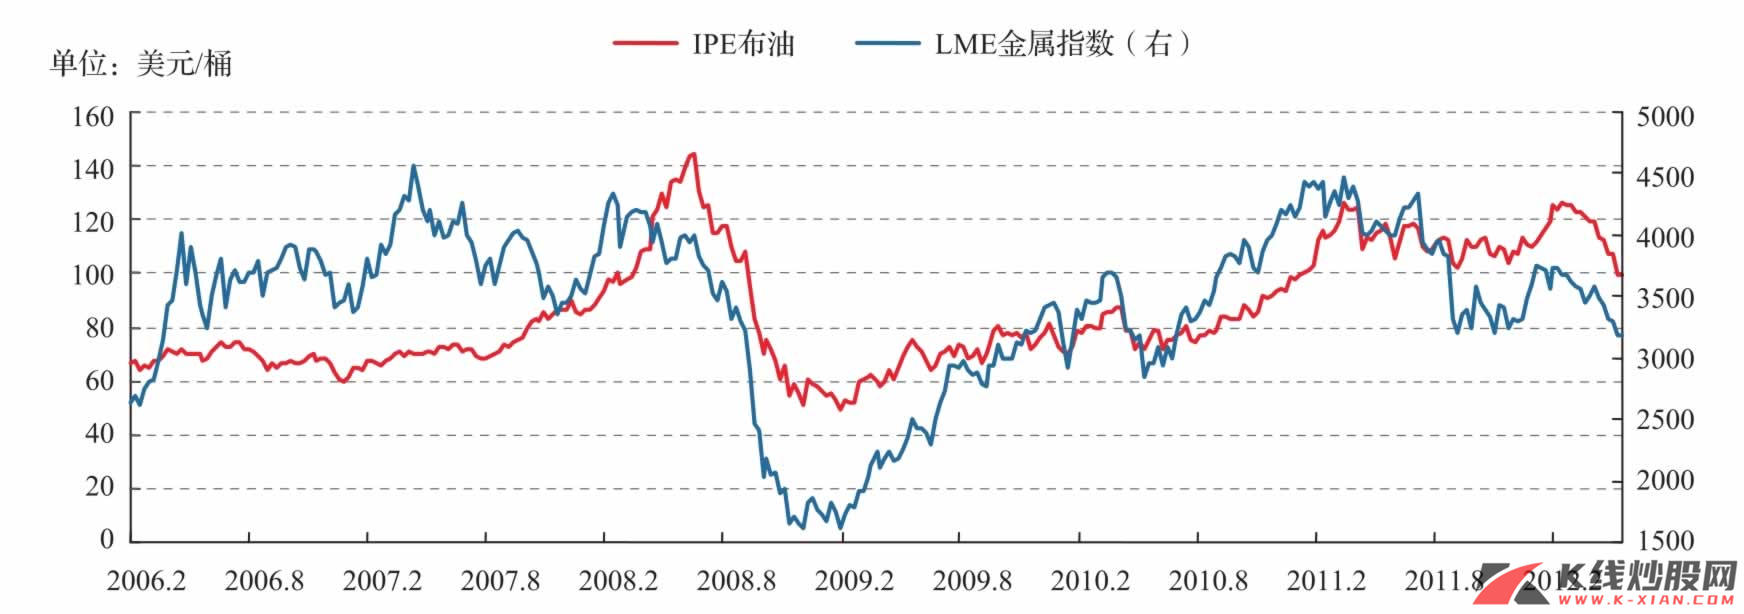 IPE布油及LME金属指数周下跌显著